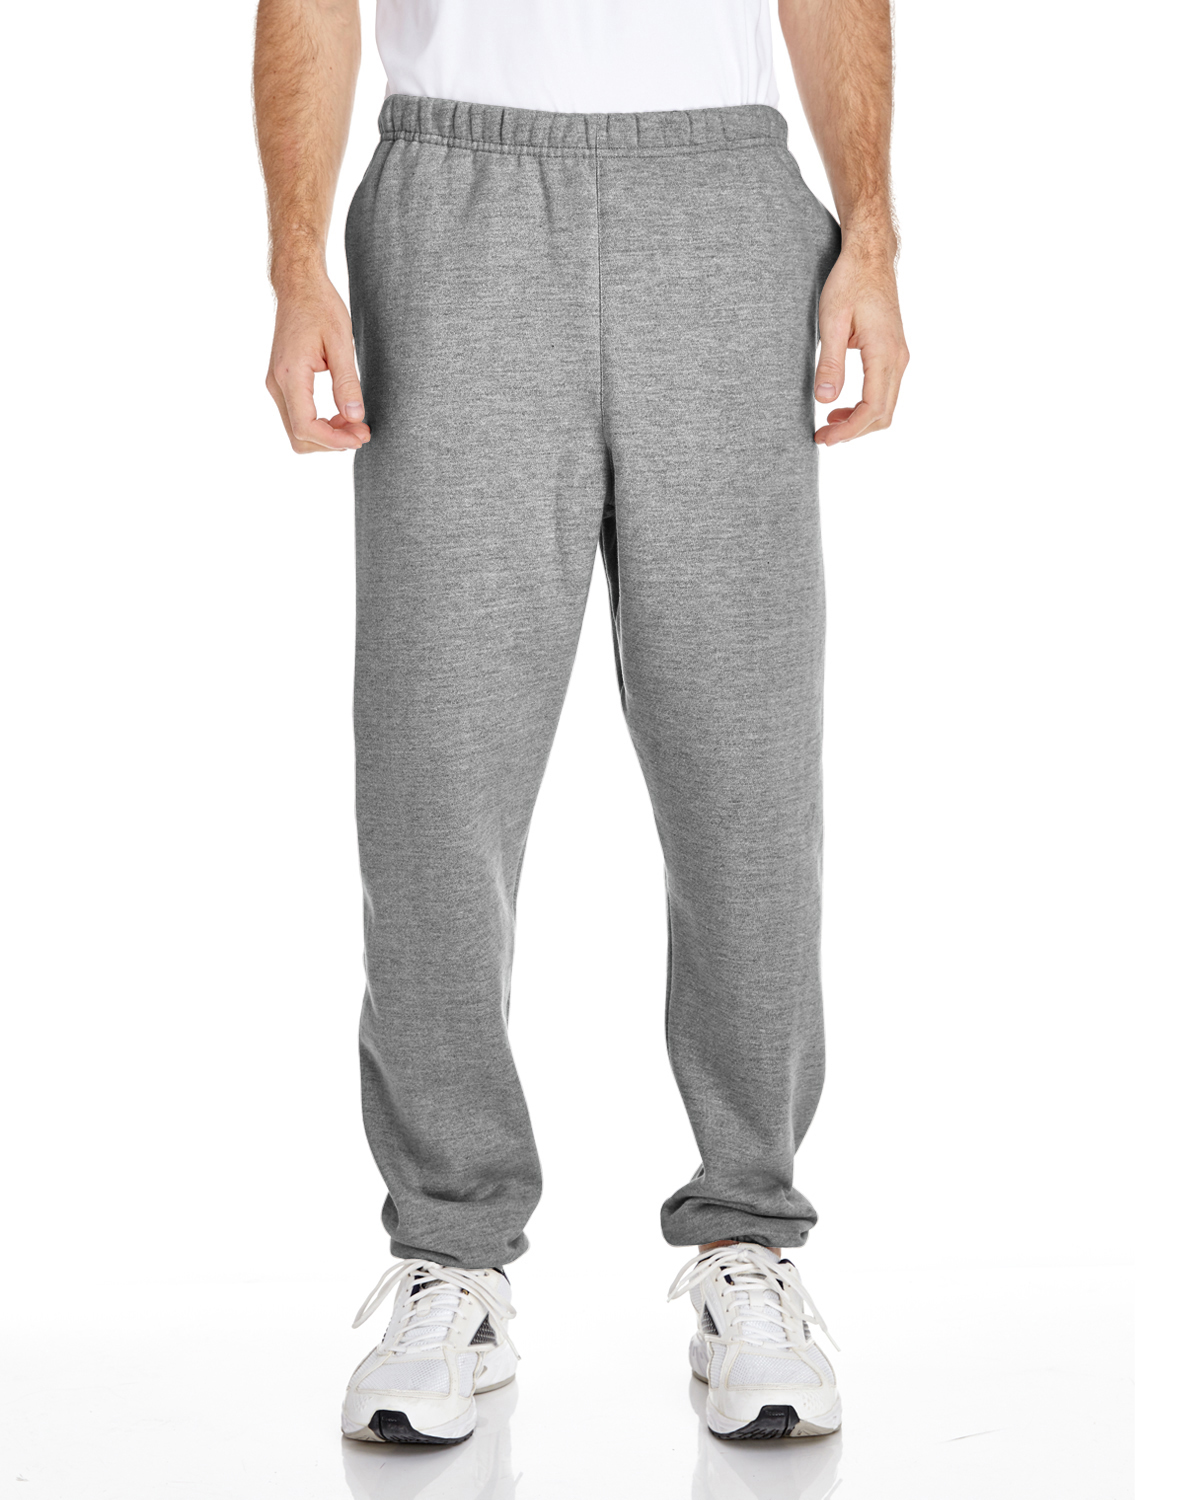 grey champion pants